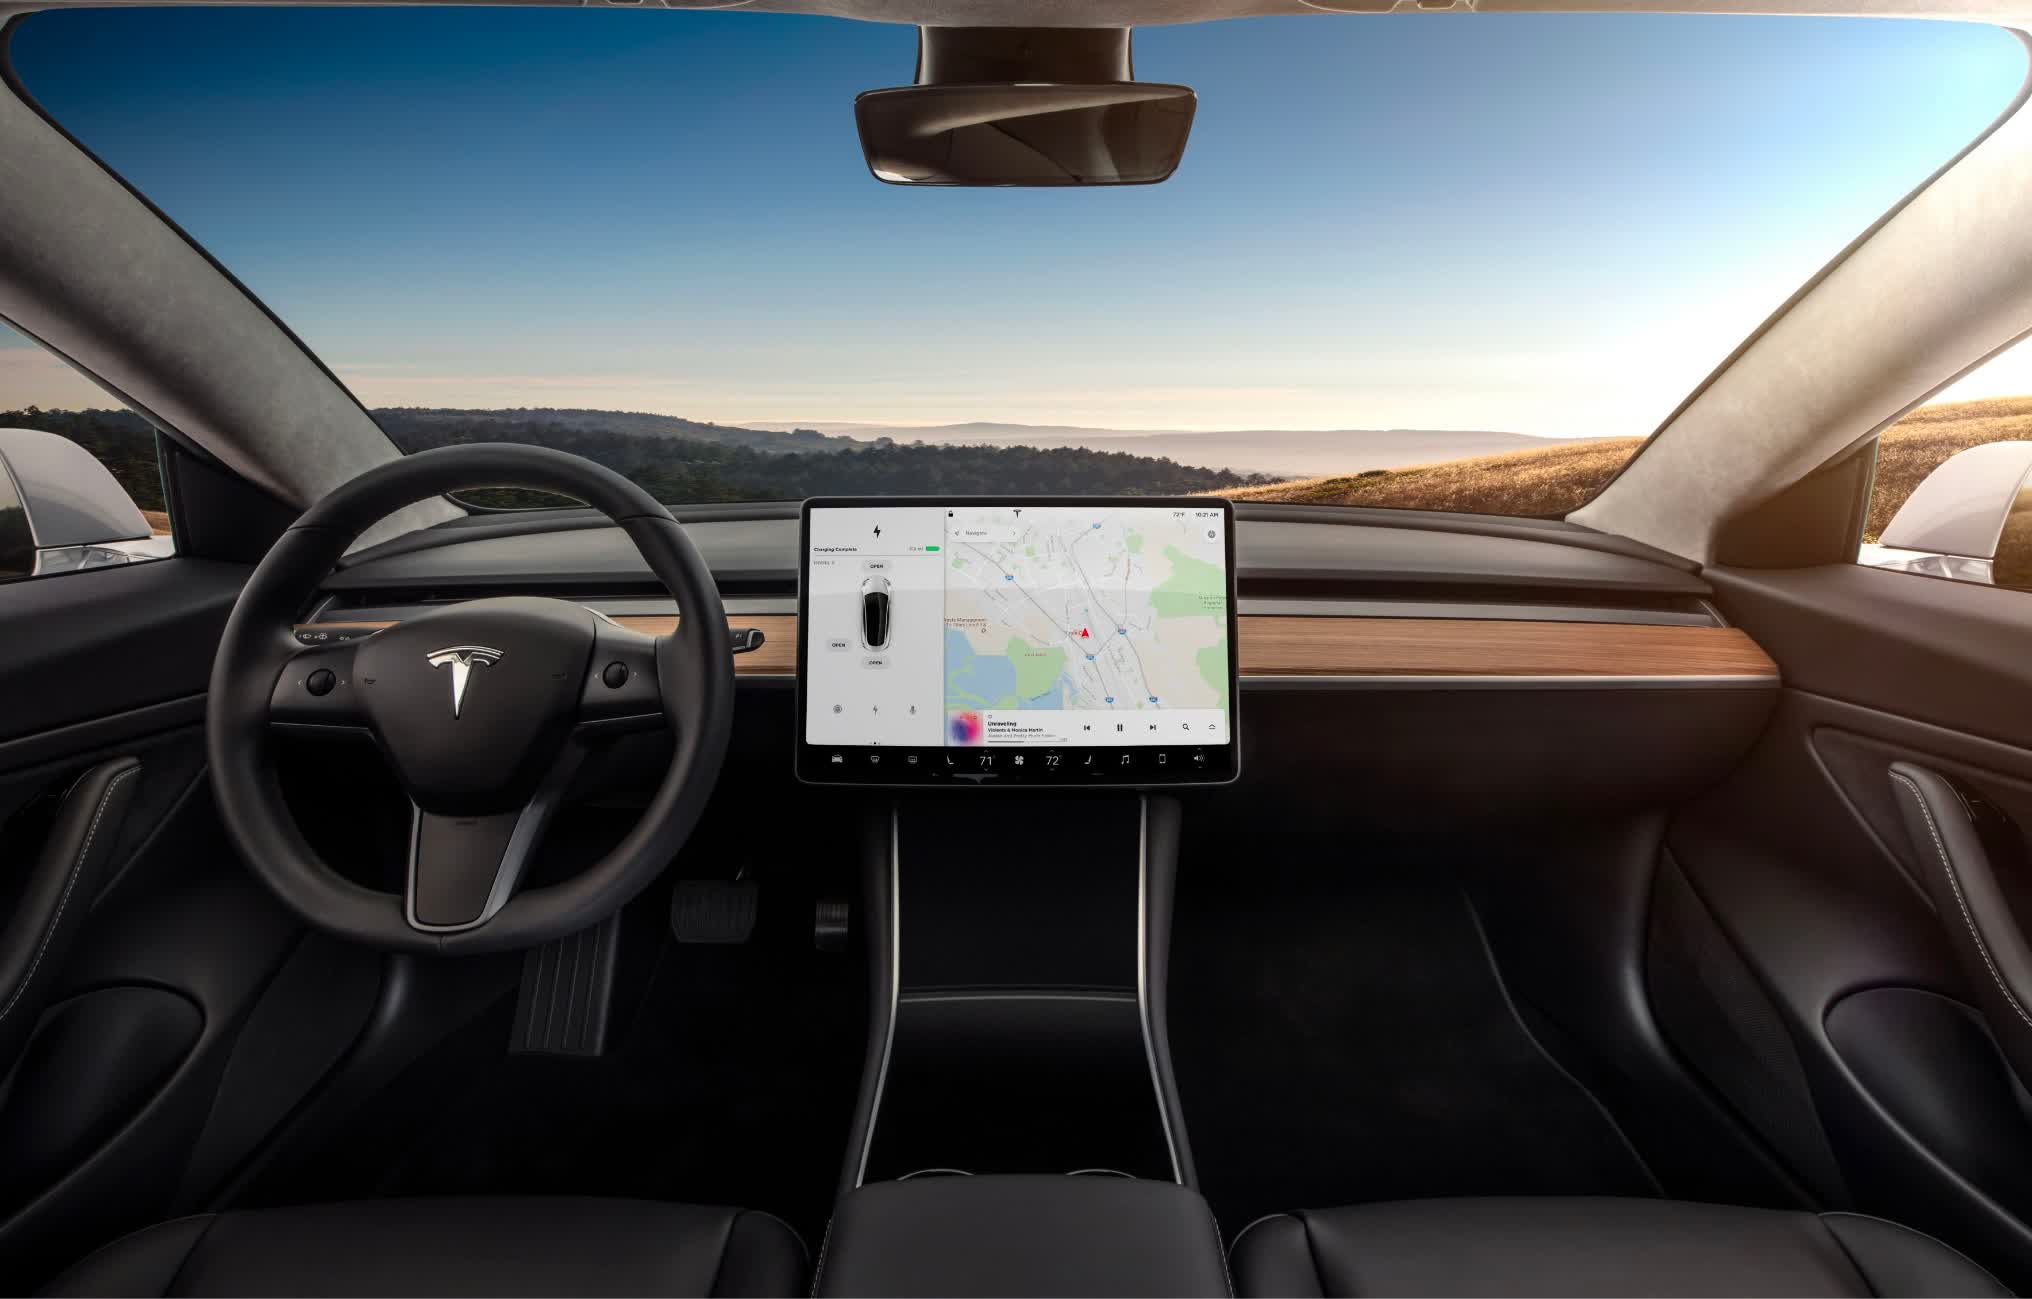 Tesla finally launches Full Self-Driving beta 9